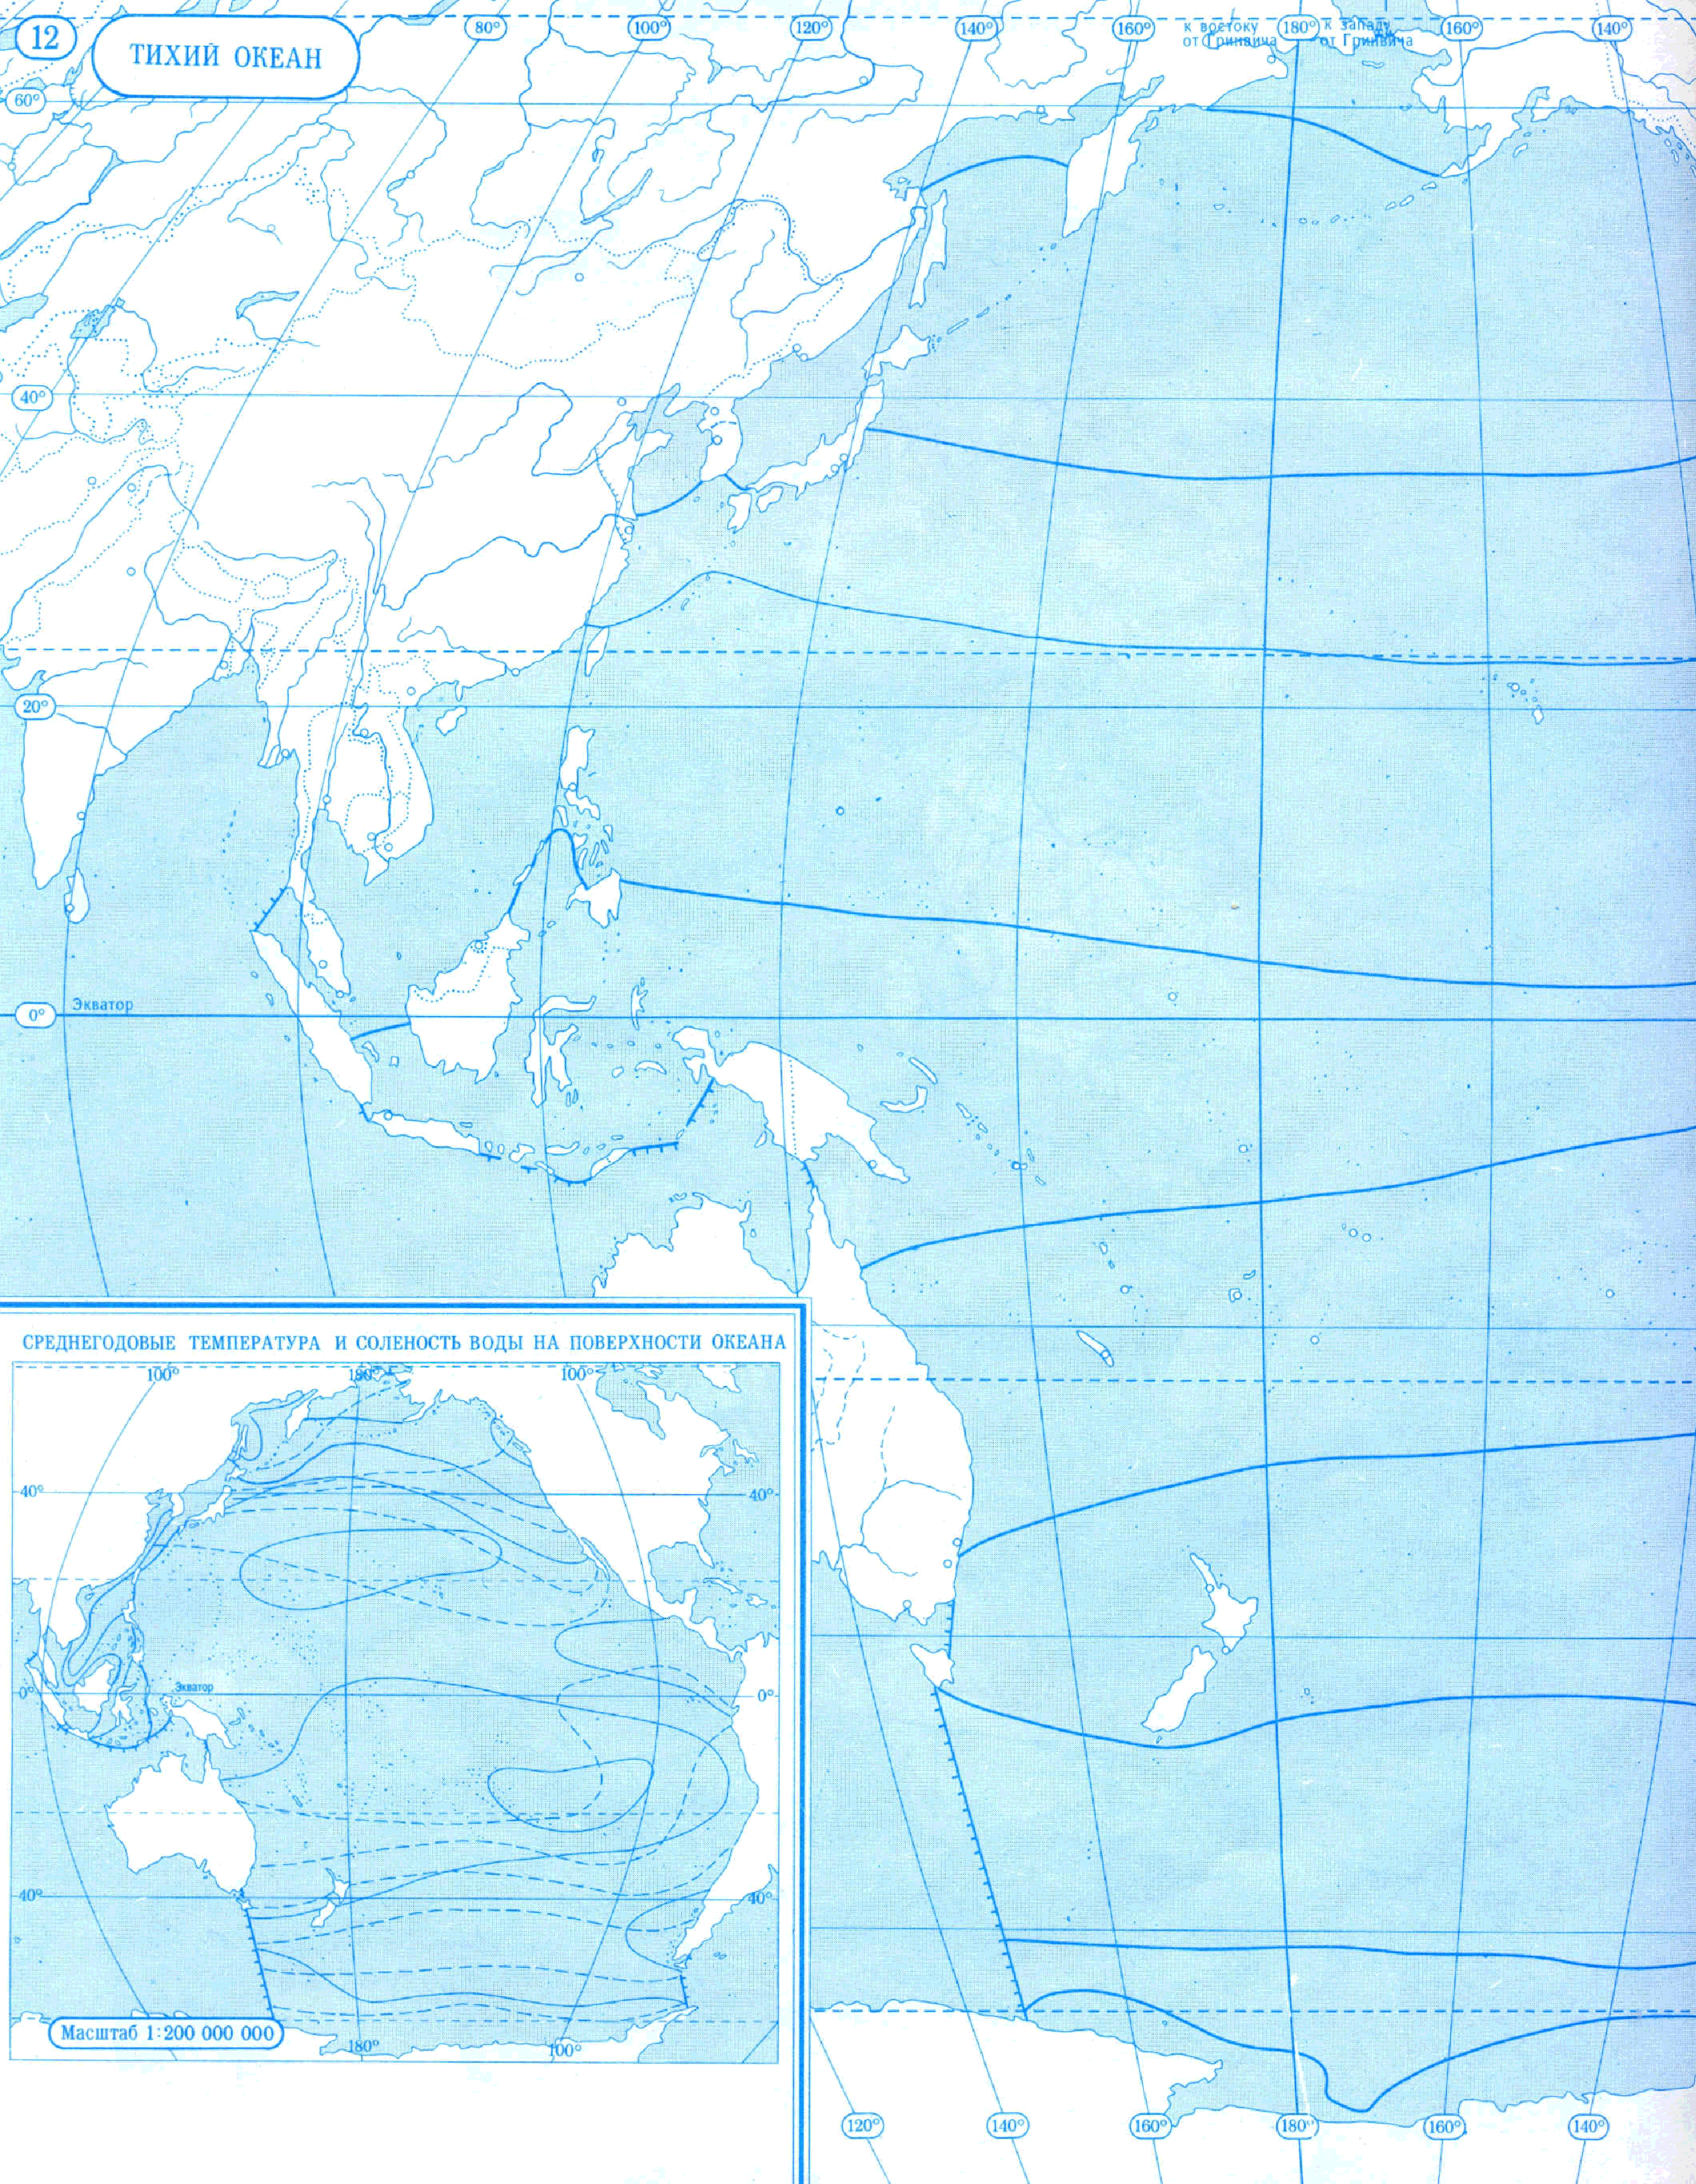 На карте буквами обозначены объекты тихий океан. Атлас 7 класс география карта тихий океан. Контурная карта по географии 7 класс тихий океан. Контурная карта по географии 7 кл тихий океан. Карта тихий океан 7.